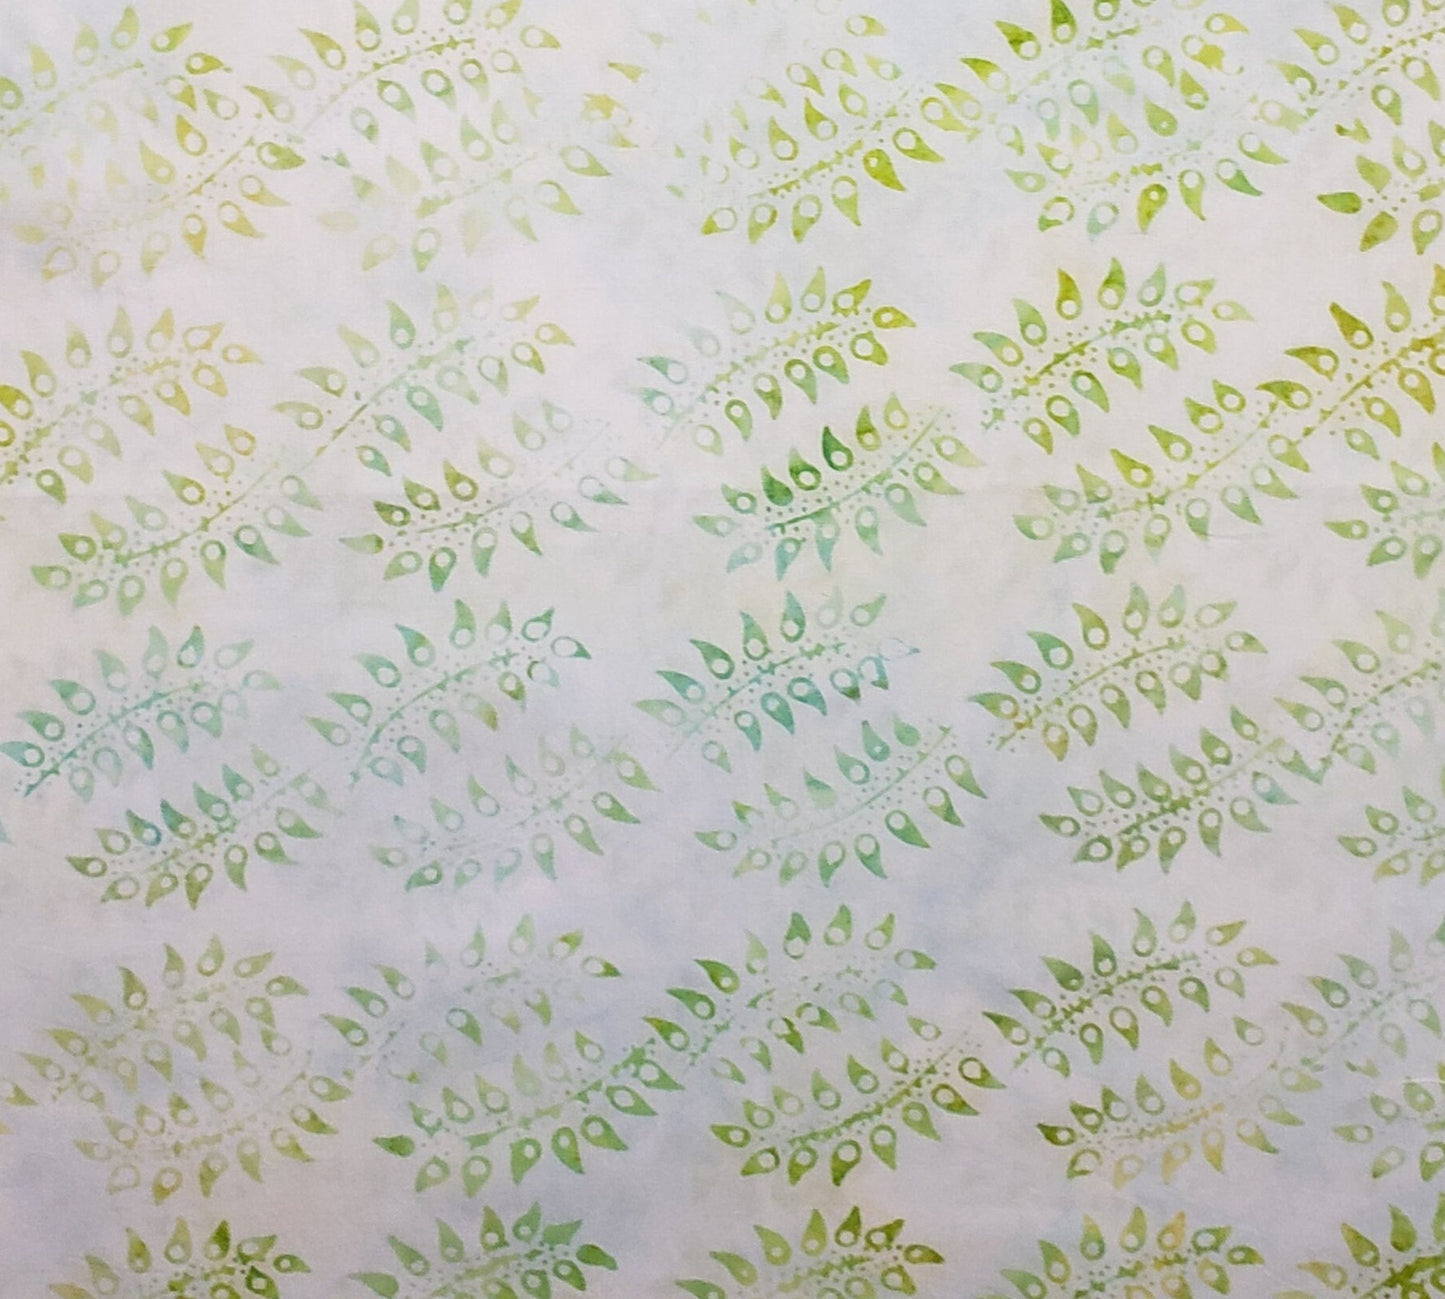 BATIK - White Fabric / Yellow, Green and Blue "Leaf" Pattern